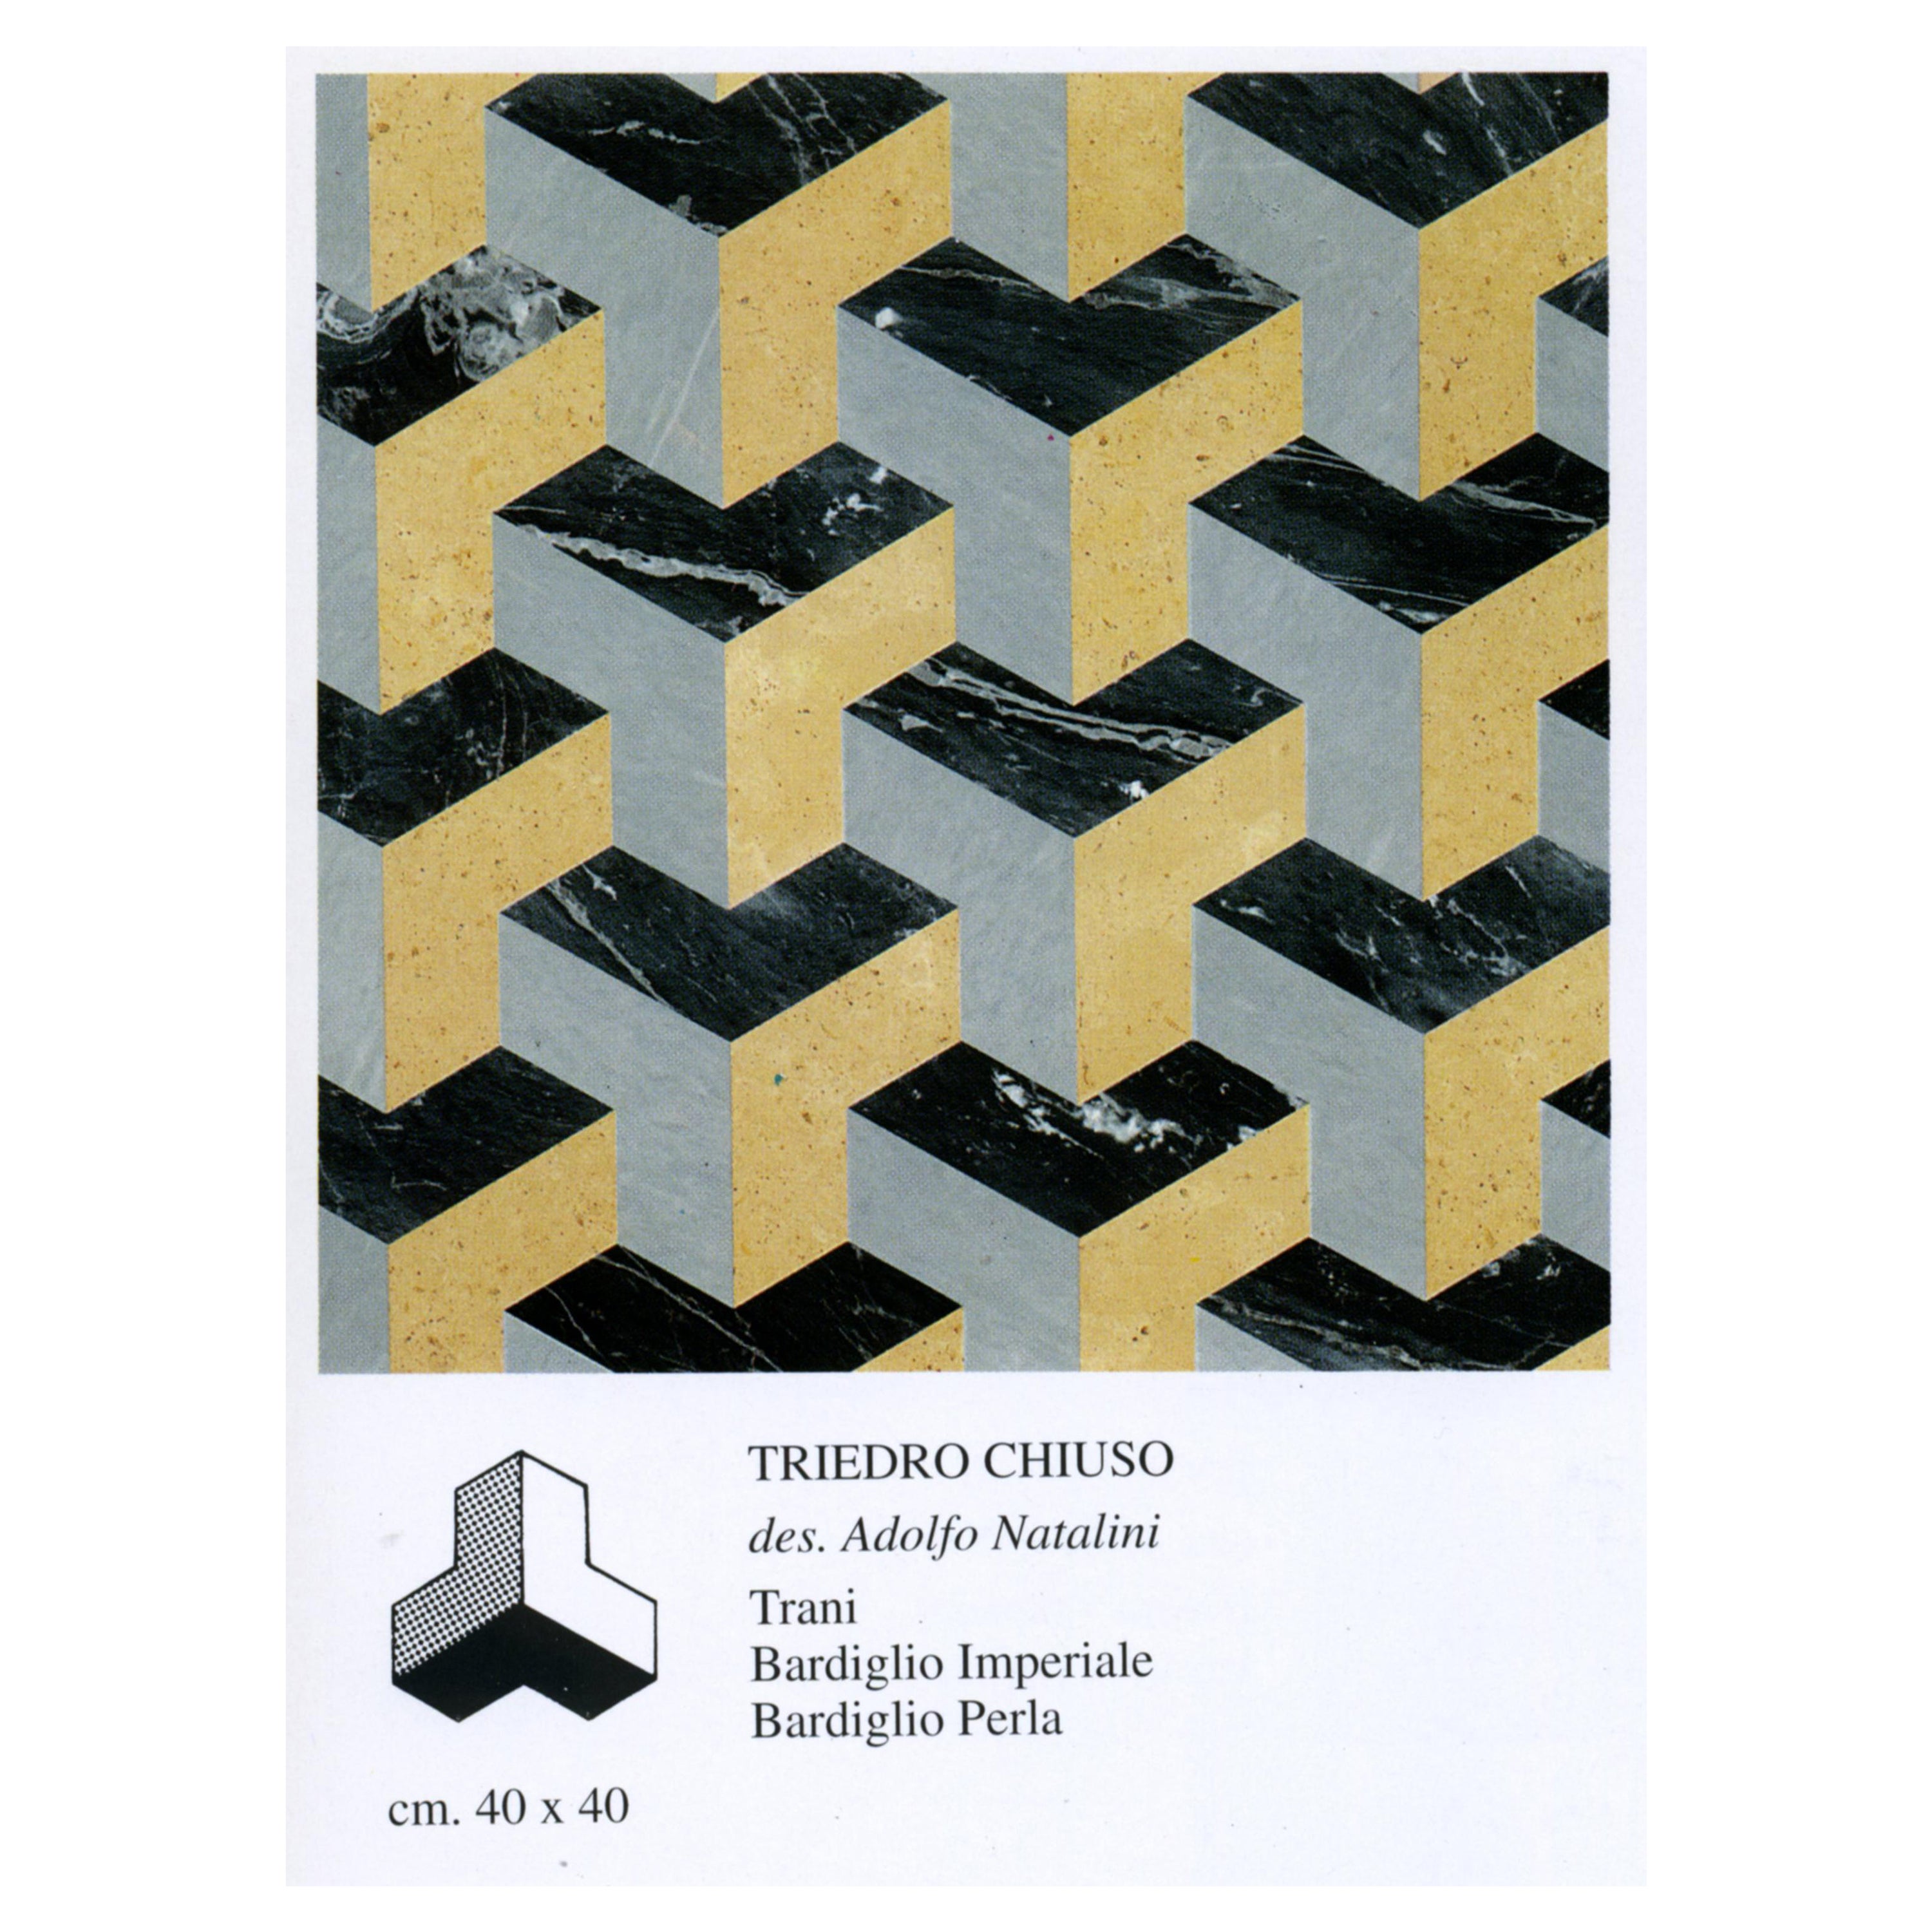 21st Century by A.Natalini "TRIEDRO" Italian Modular Marble Floor and Coating